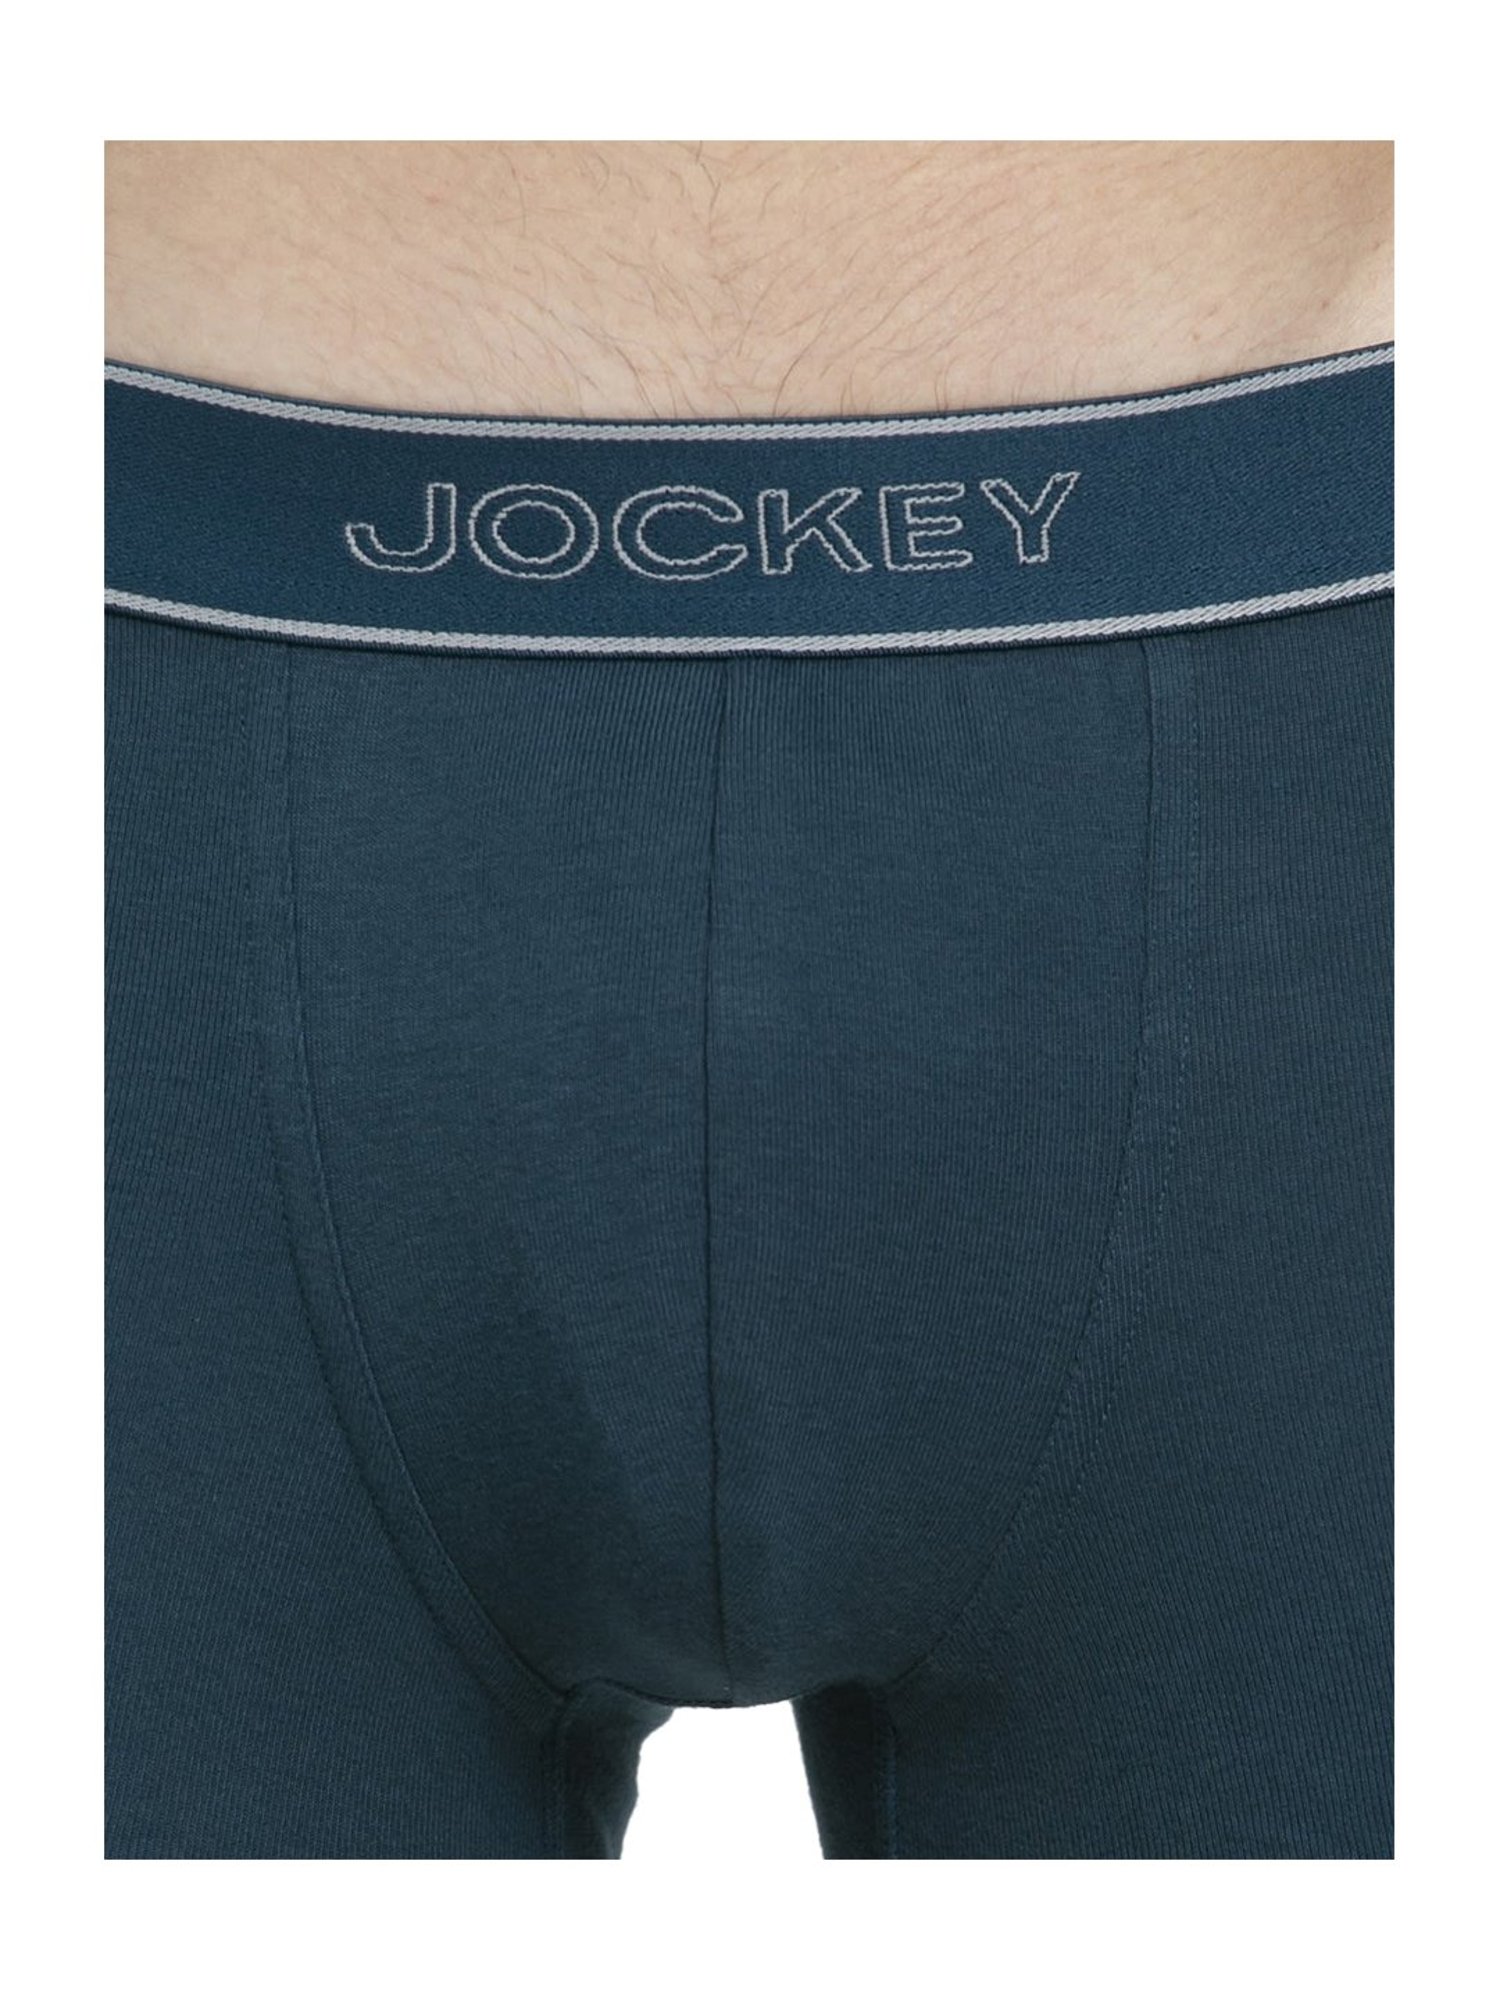 Jockey NY03 Super Combed Cotton Boxer Briefs with Ultrasoft